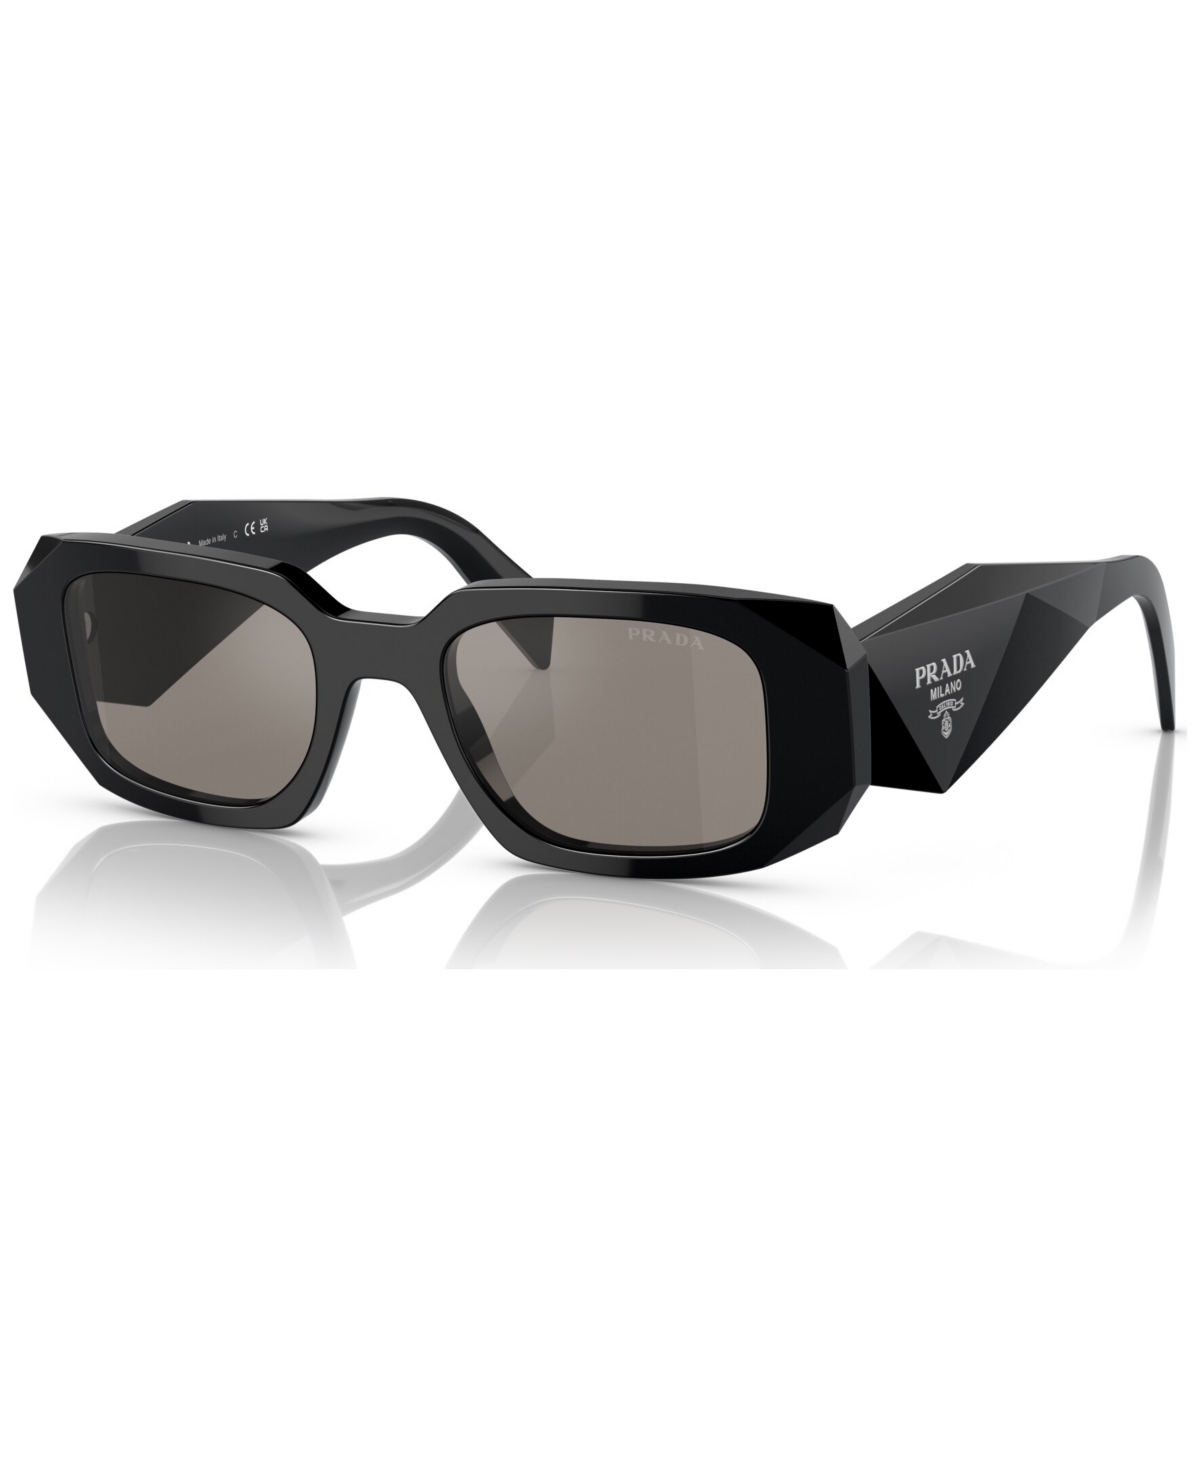 Prada Women's Sunglasses, Pr 17ws In Black Mirrored